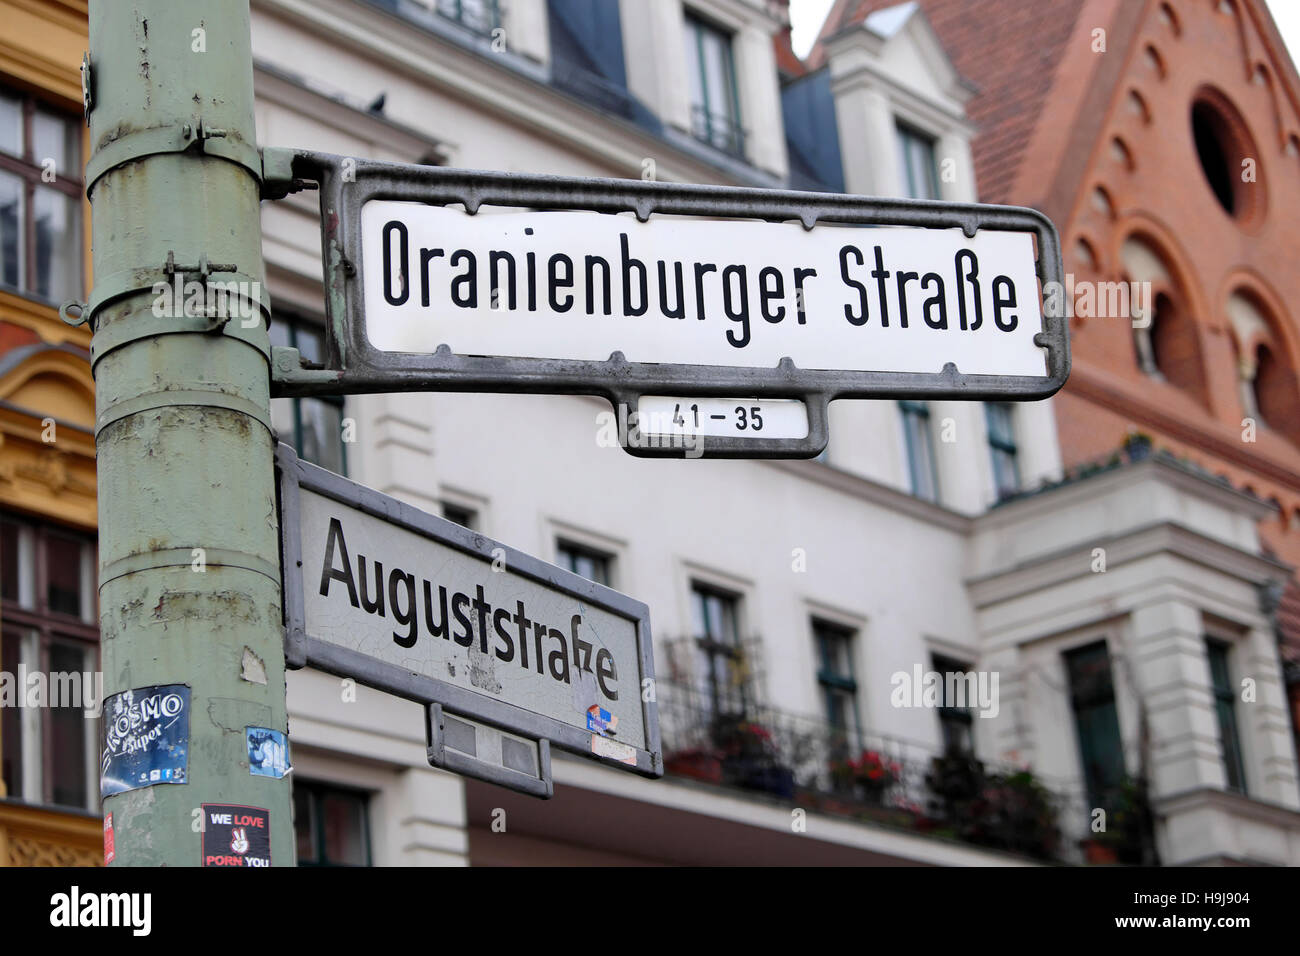 Oranienburger Strasse and Auguststrasse street signs in Berlin November 2016 Germany, Europe  KATHY DEWITT Stock Photo